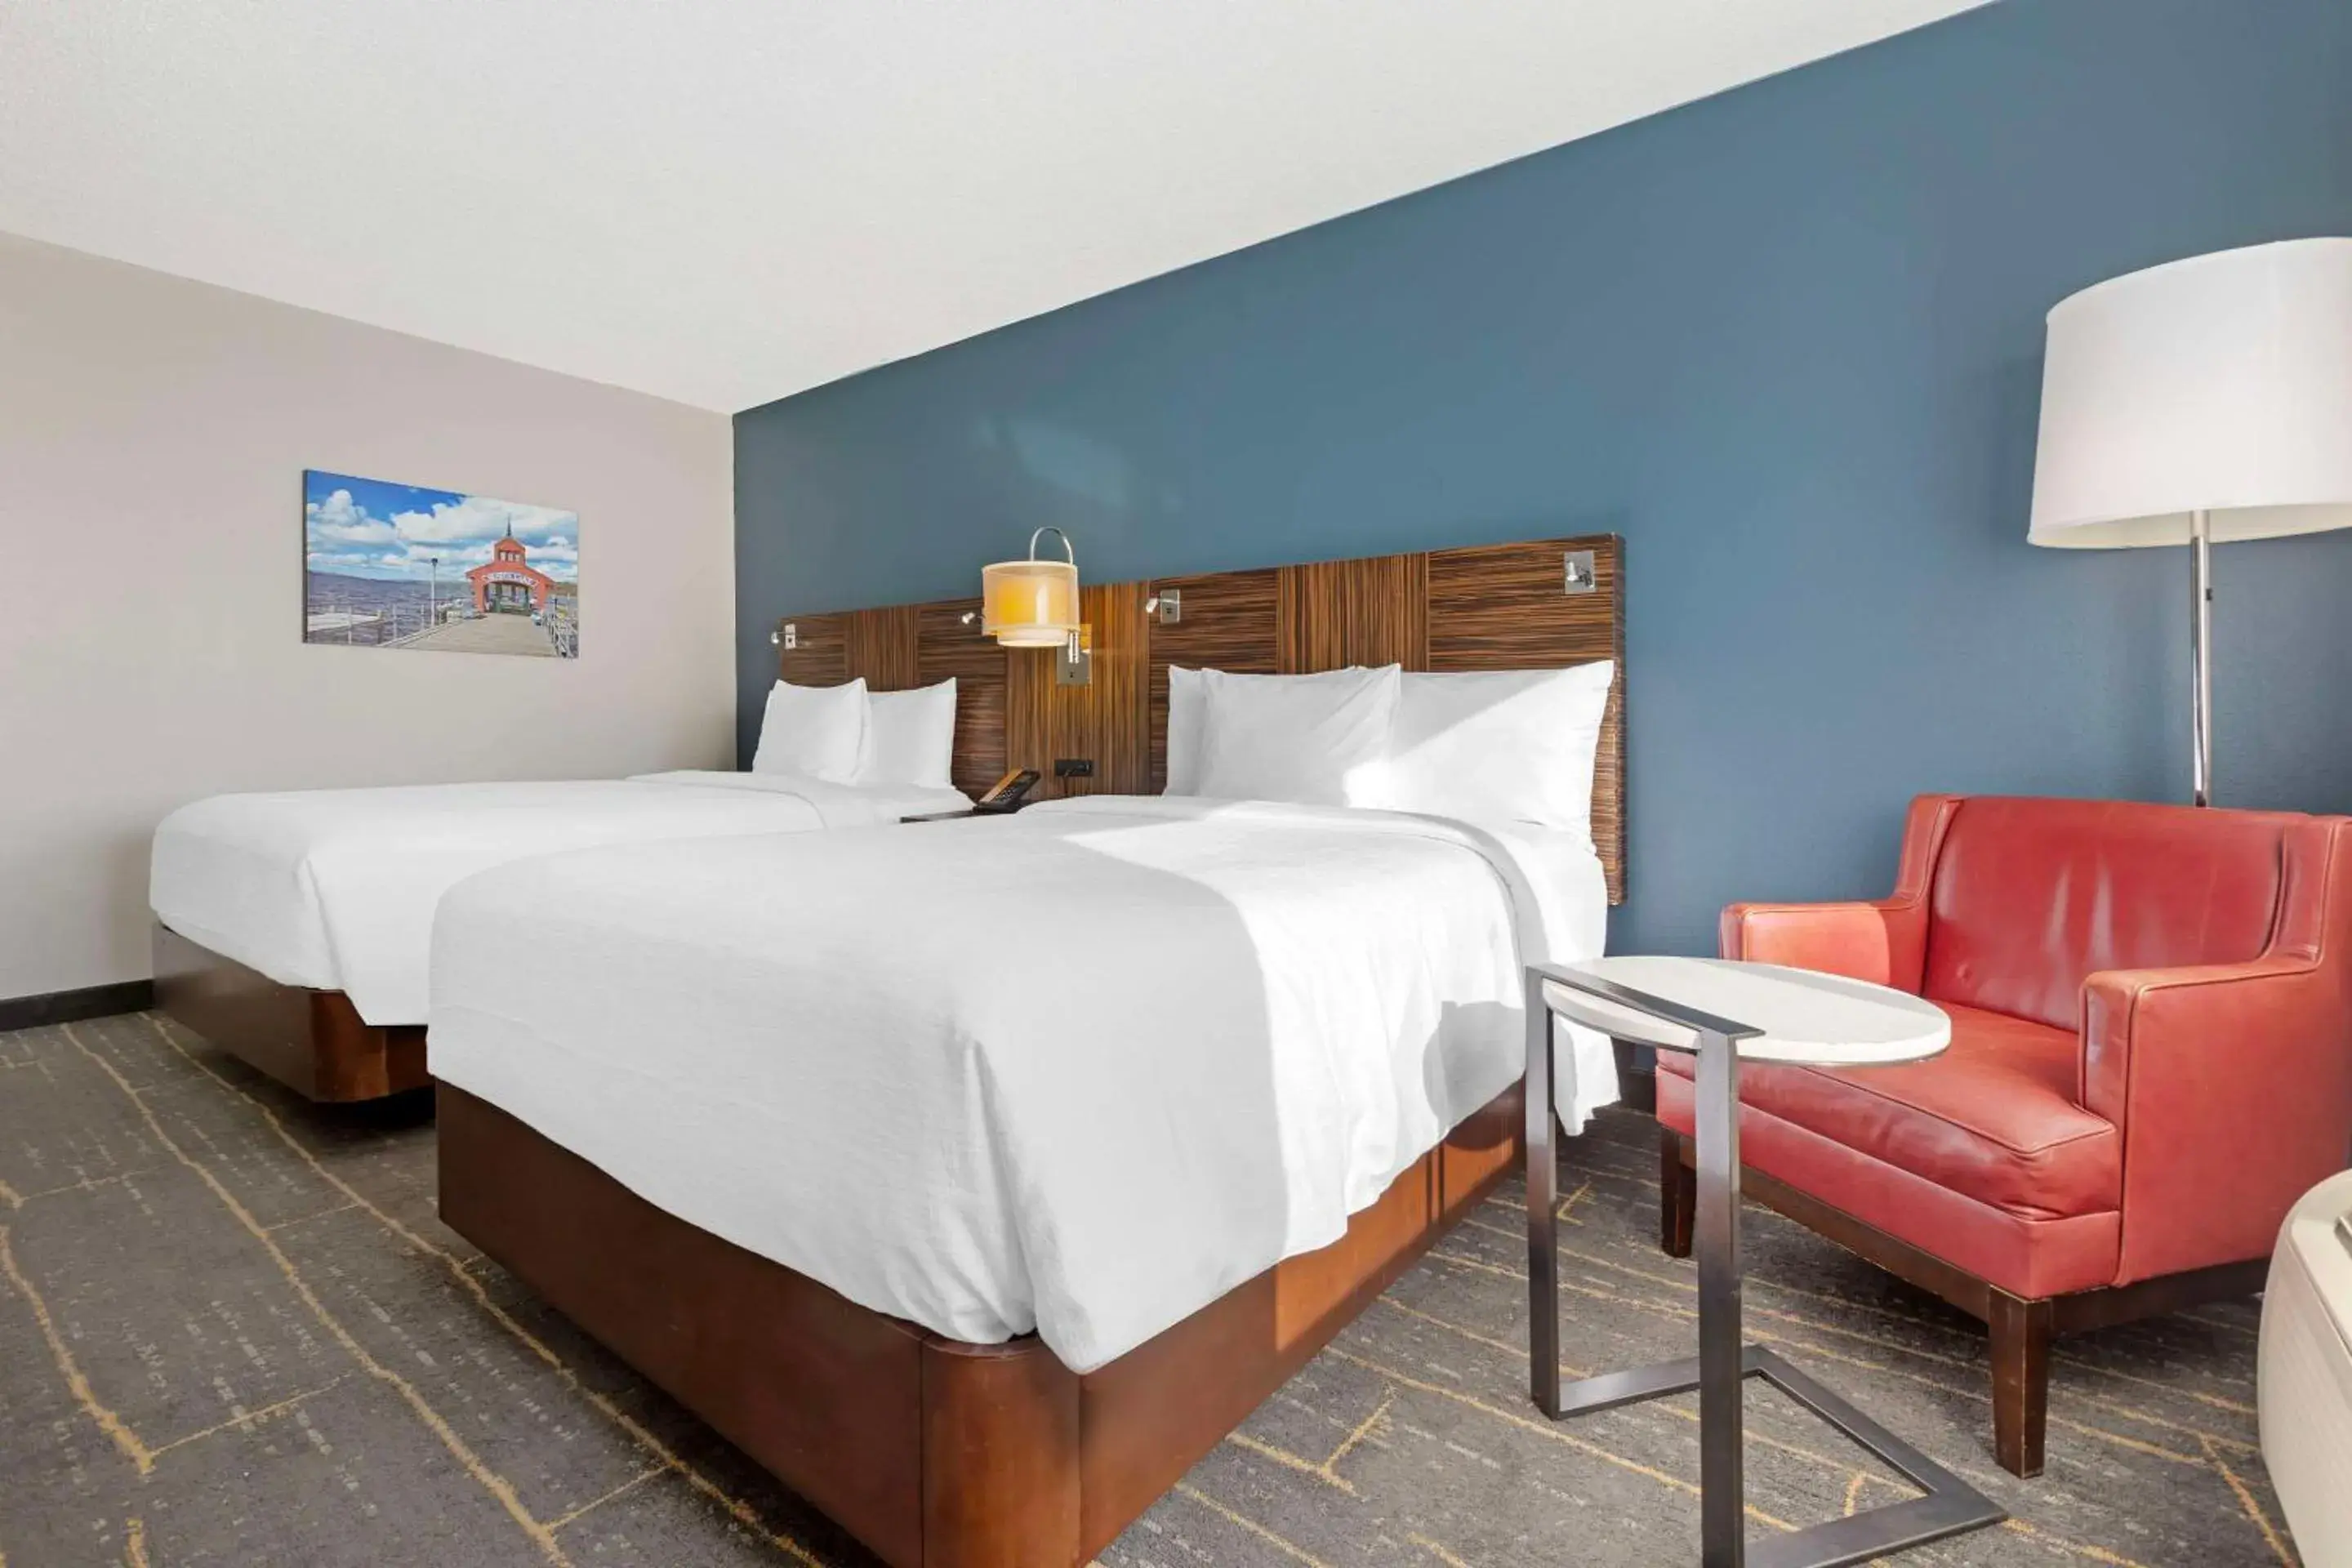 Bedroom, Bed in Quality Inn near Finger Lakes and Seneca Falls